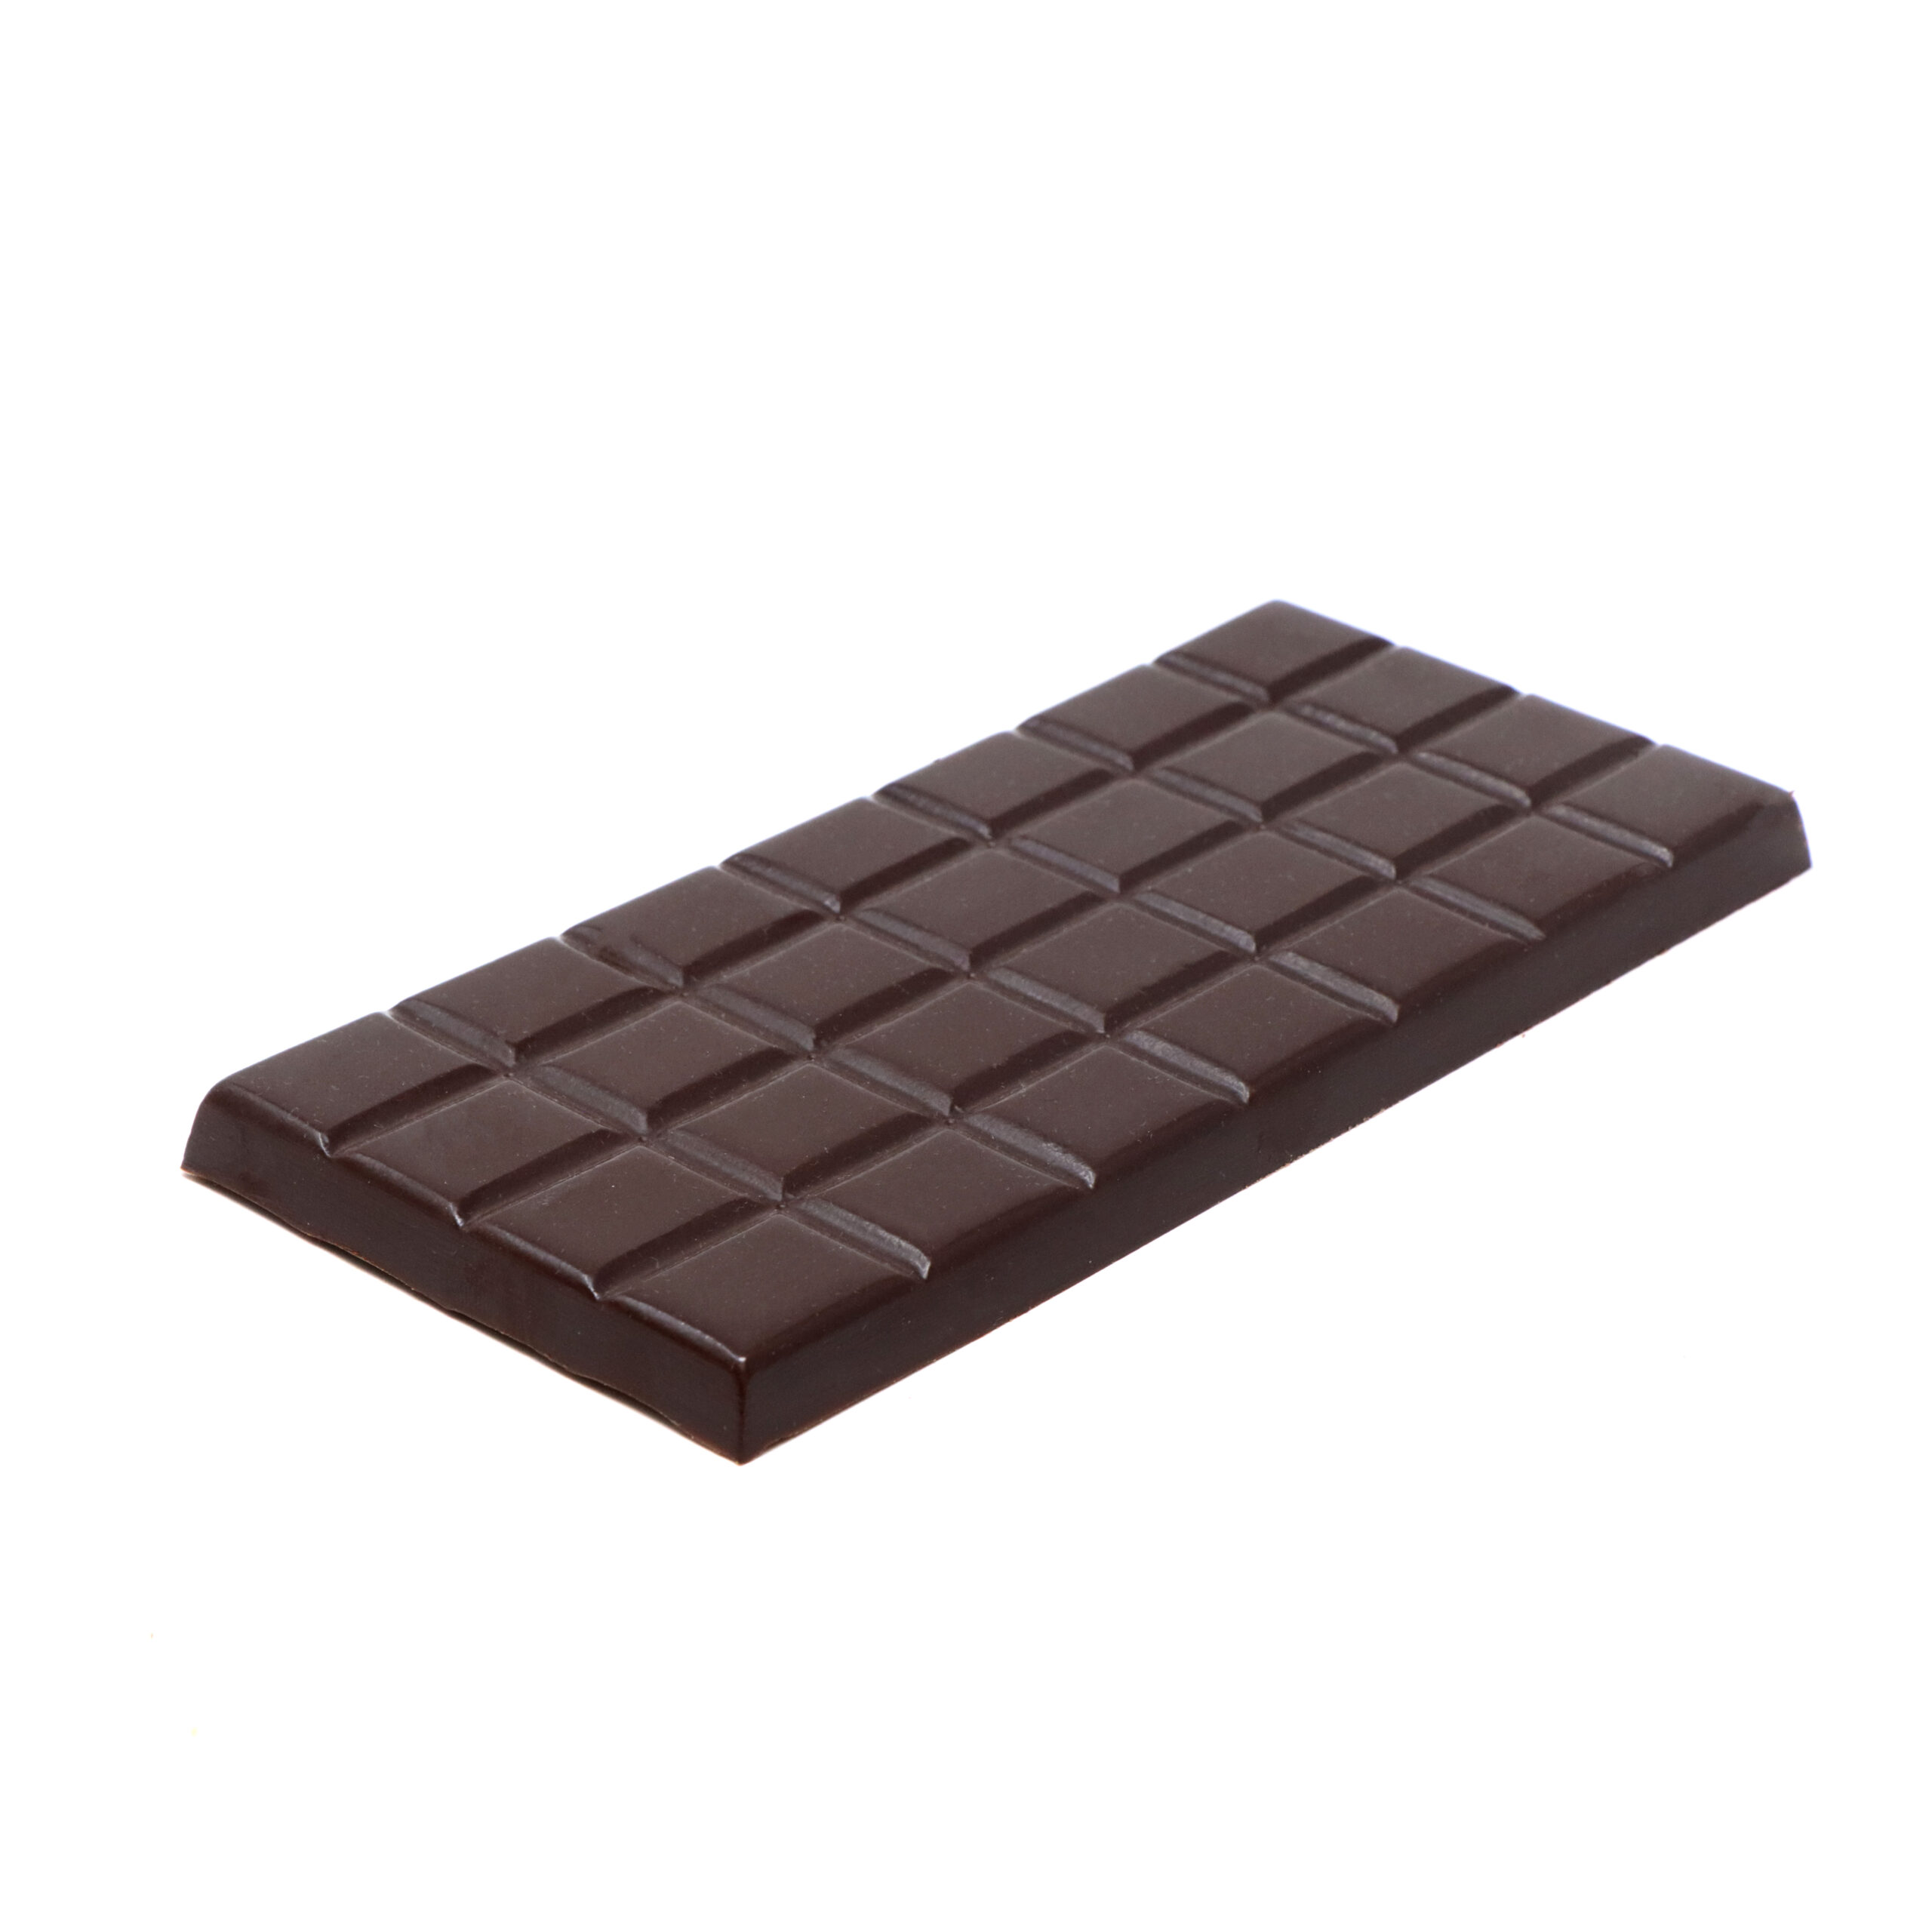 Chocolate bar mold Maya 55 grams 275MM X 135MM 4 cavities-Polycarbonate